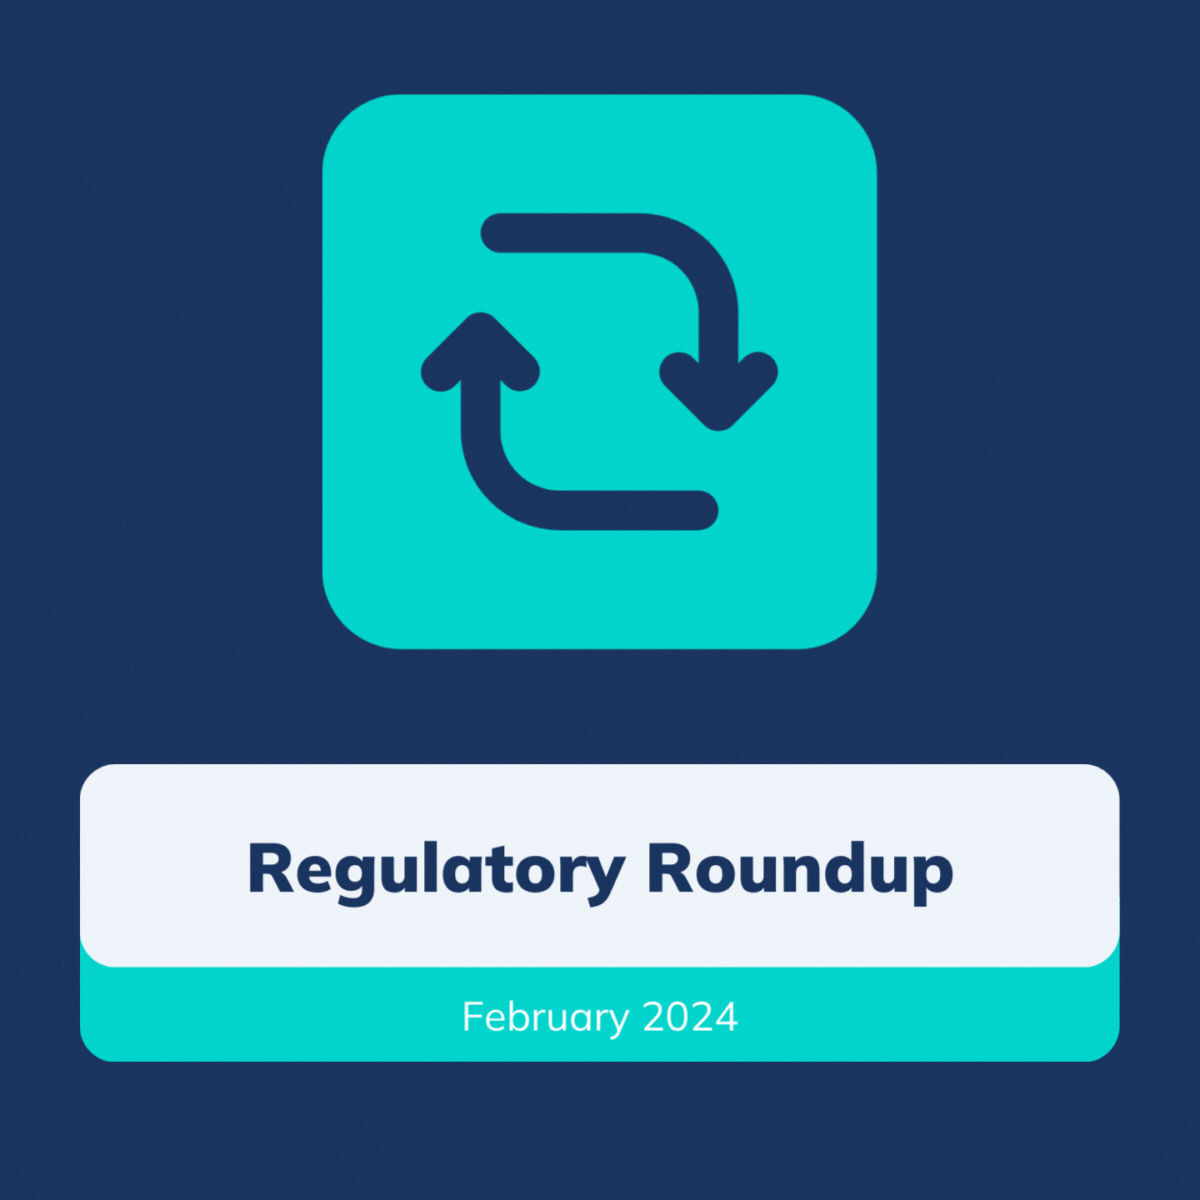 Regulatory Roundup Nov. (1200 x 1200 px)